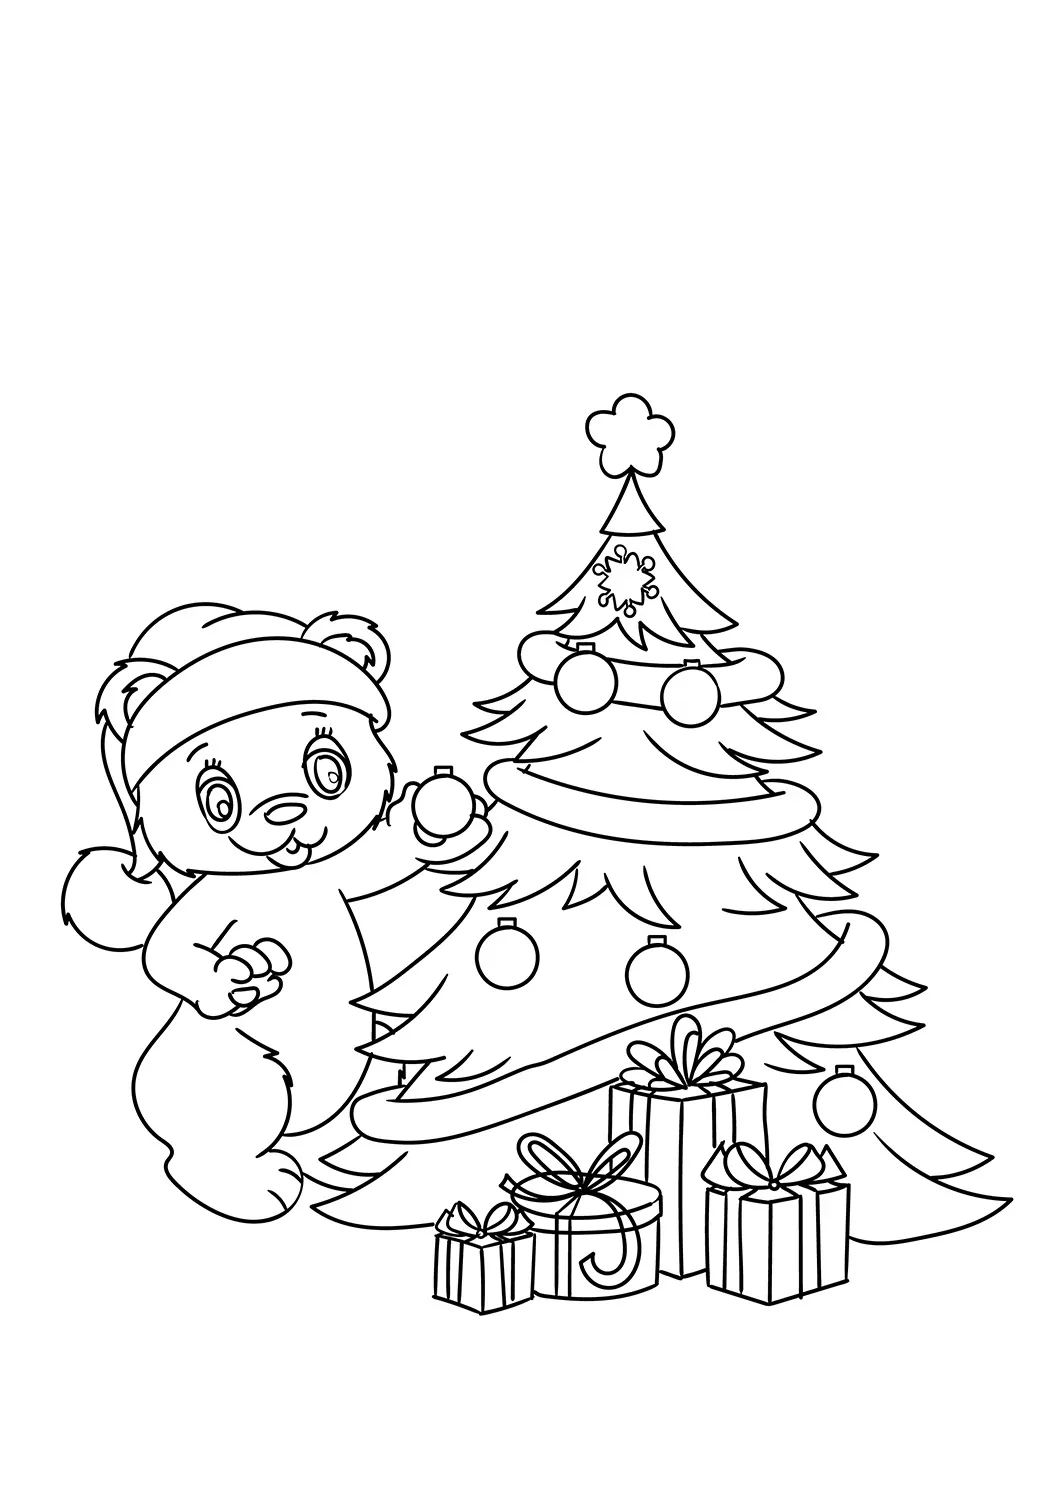 Teddy Decorating Christmas Tree